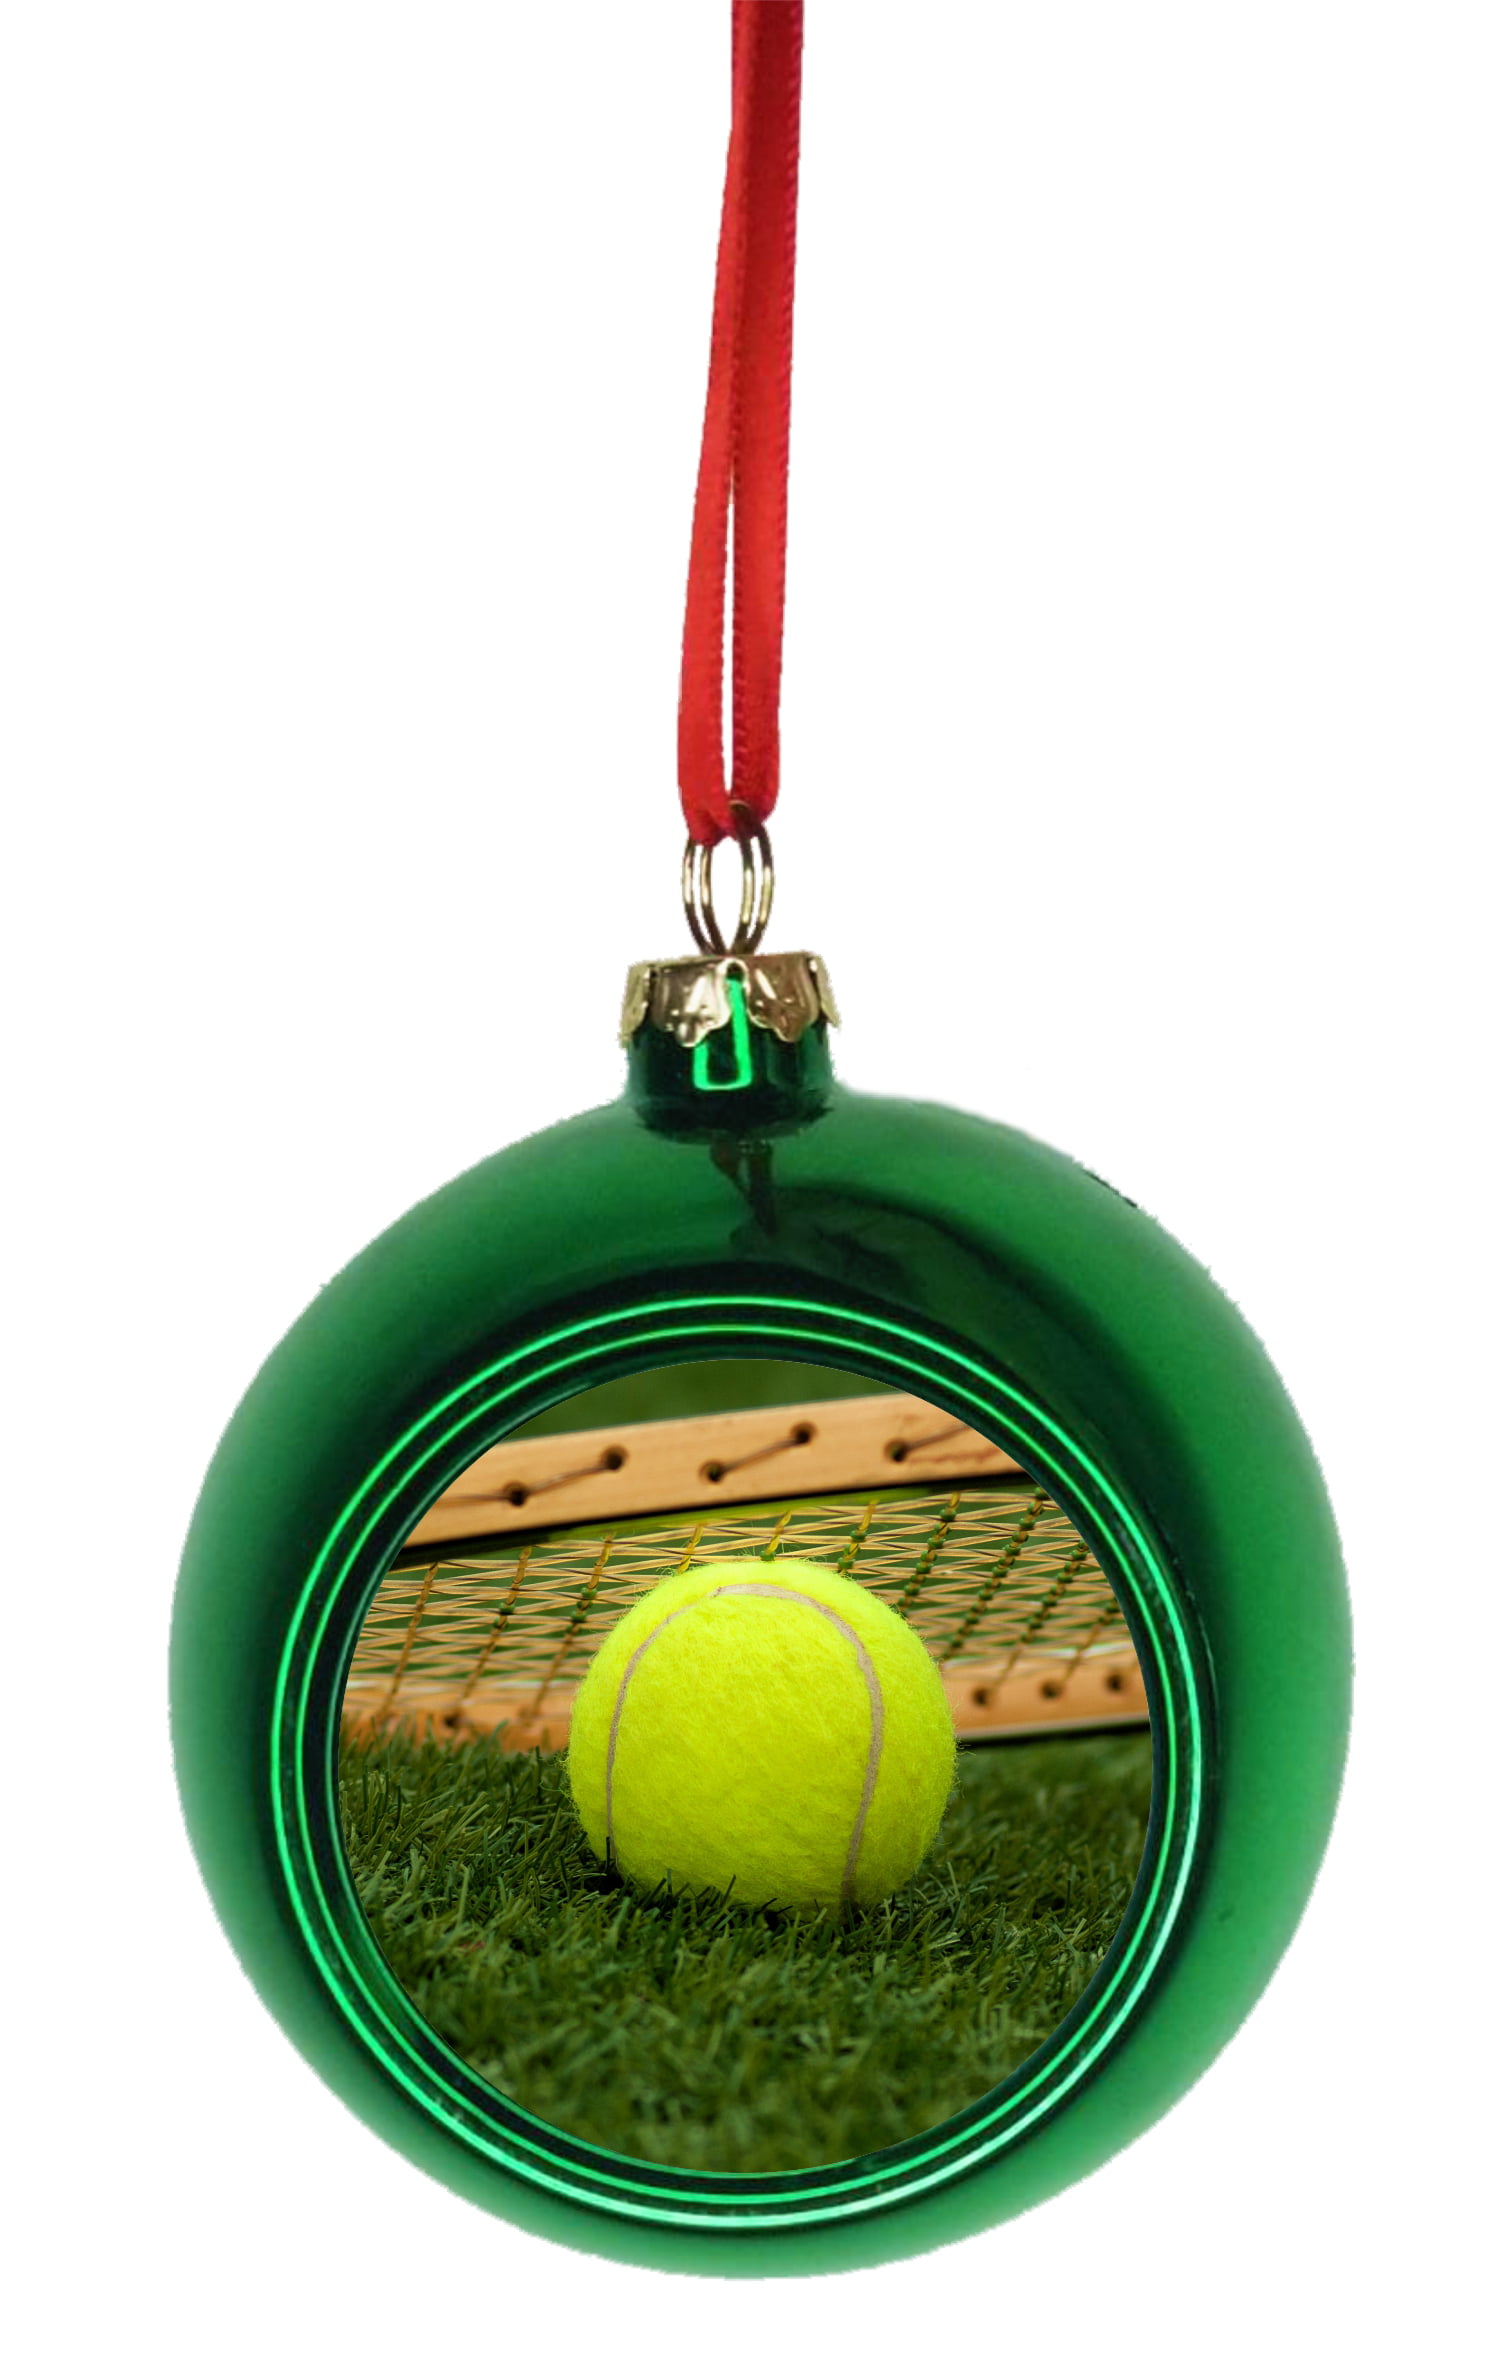 Details about   Tennis Racket Christmas Tree Ornament Christmas Bauble uck Christbaumkugel  data-mtsrclang=en-US href=# onclick=return false; 							show original title 